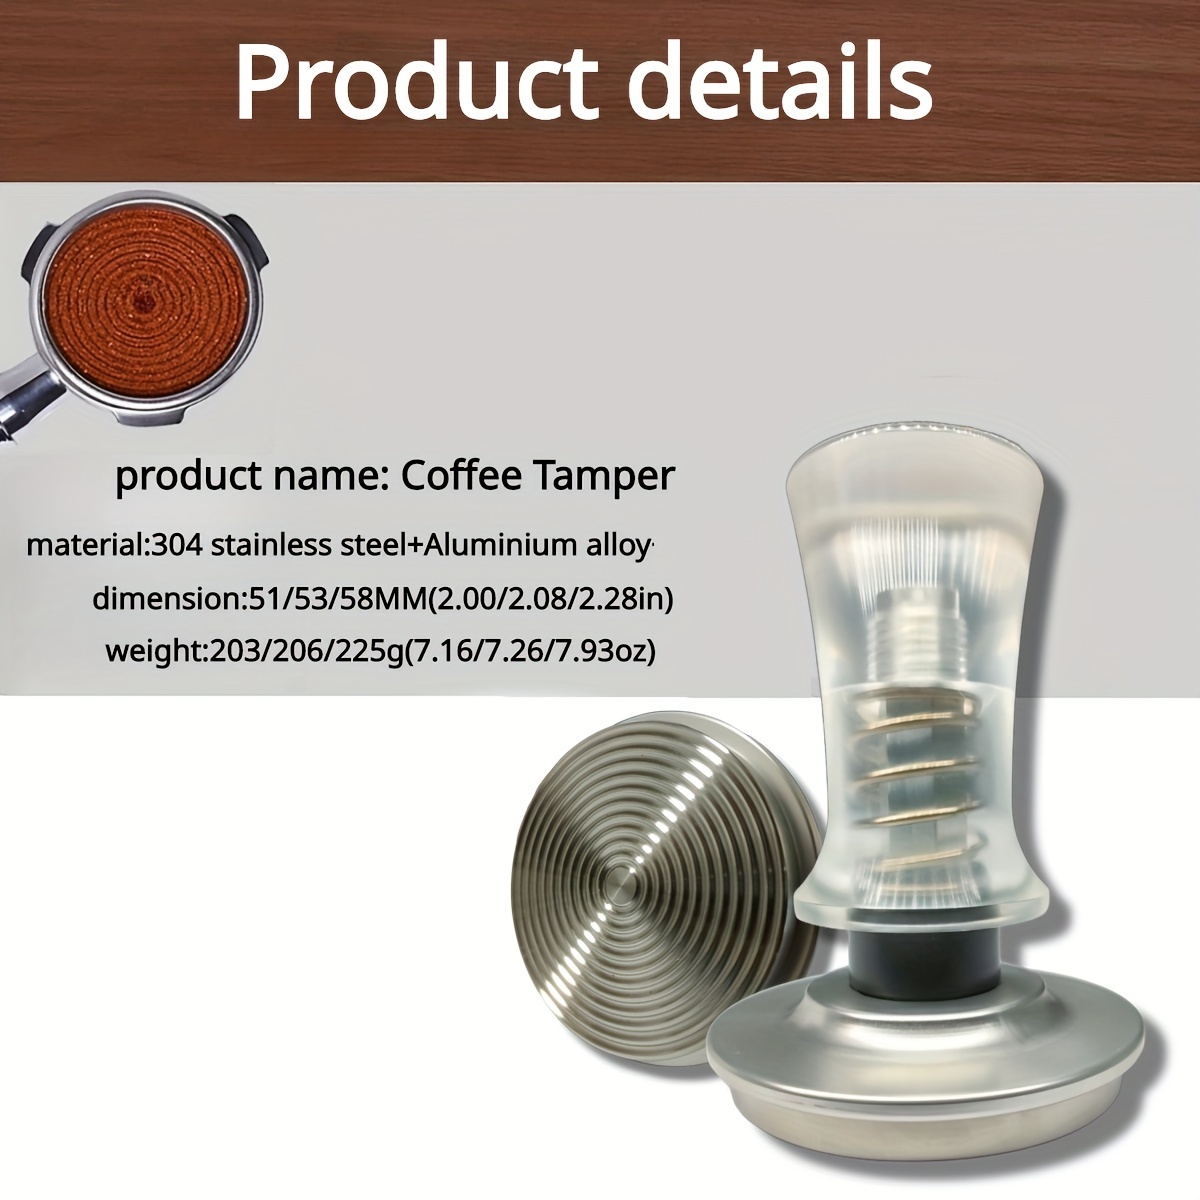 Adjustable Depth Coffee Tamper Calibrated Steady Pressure - Temu